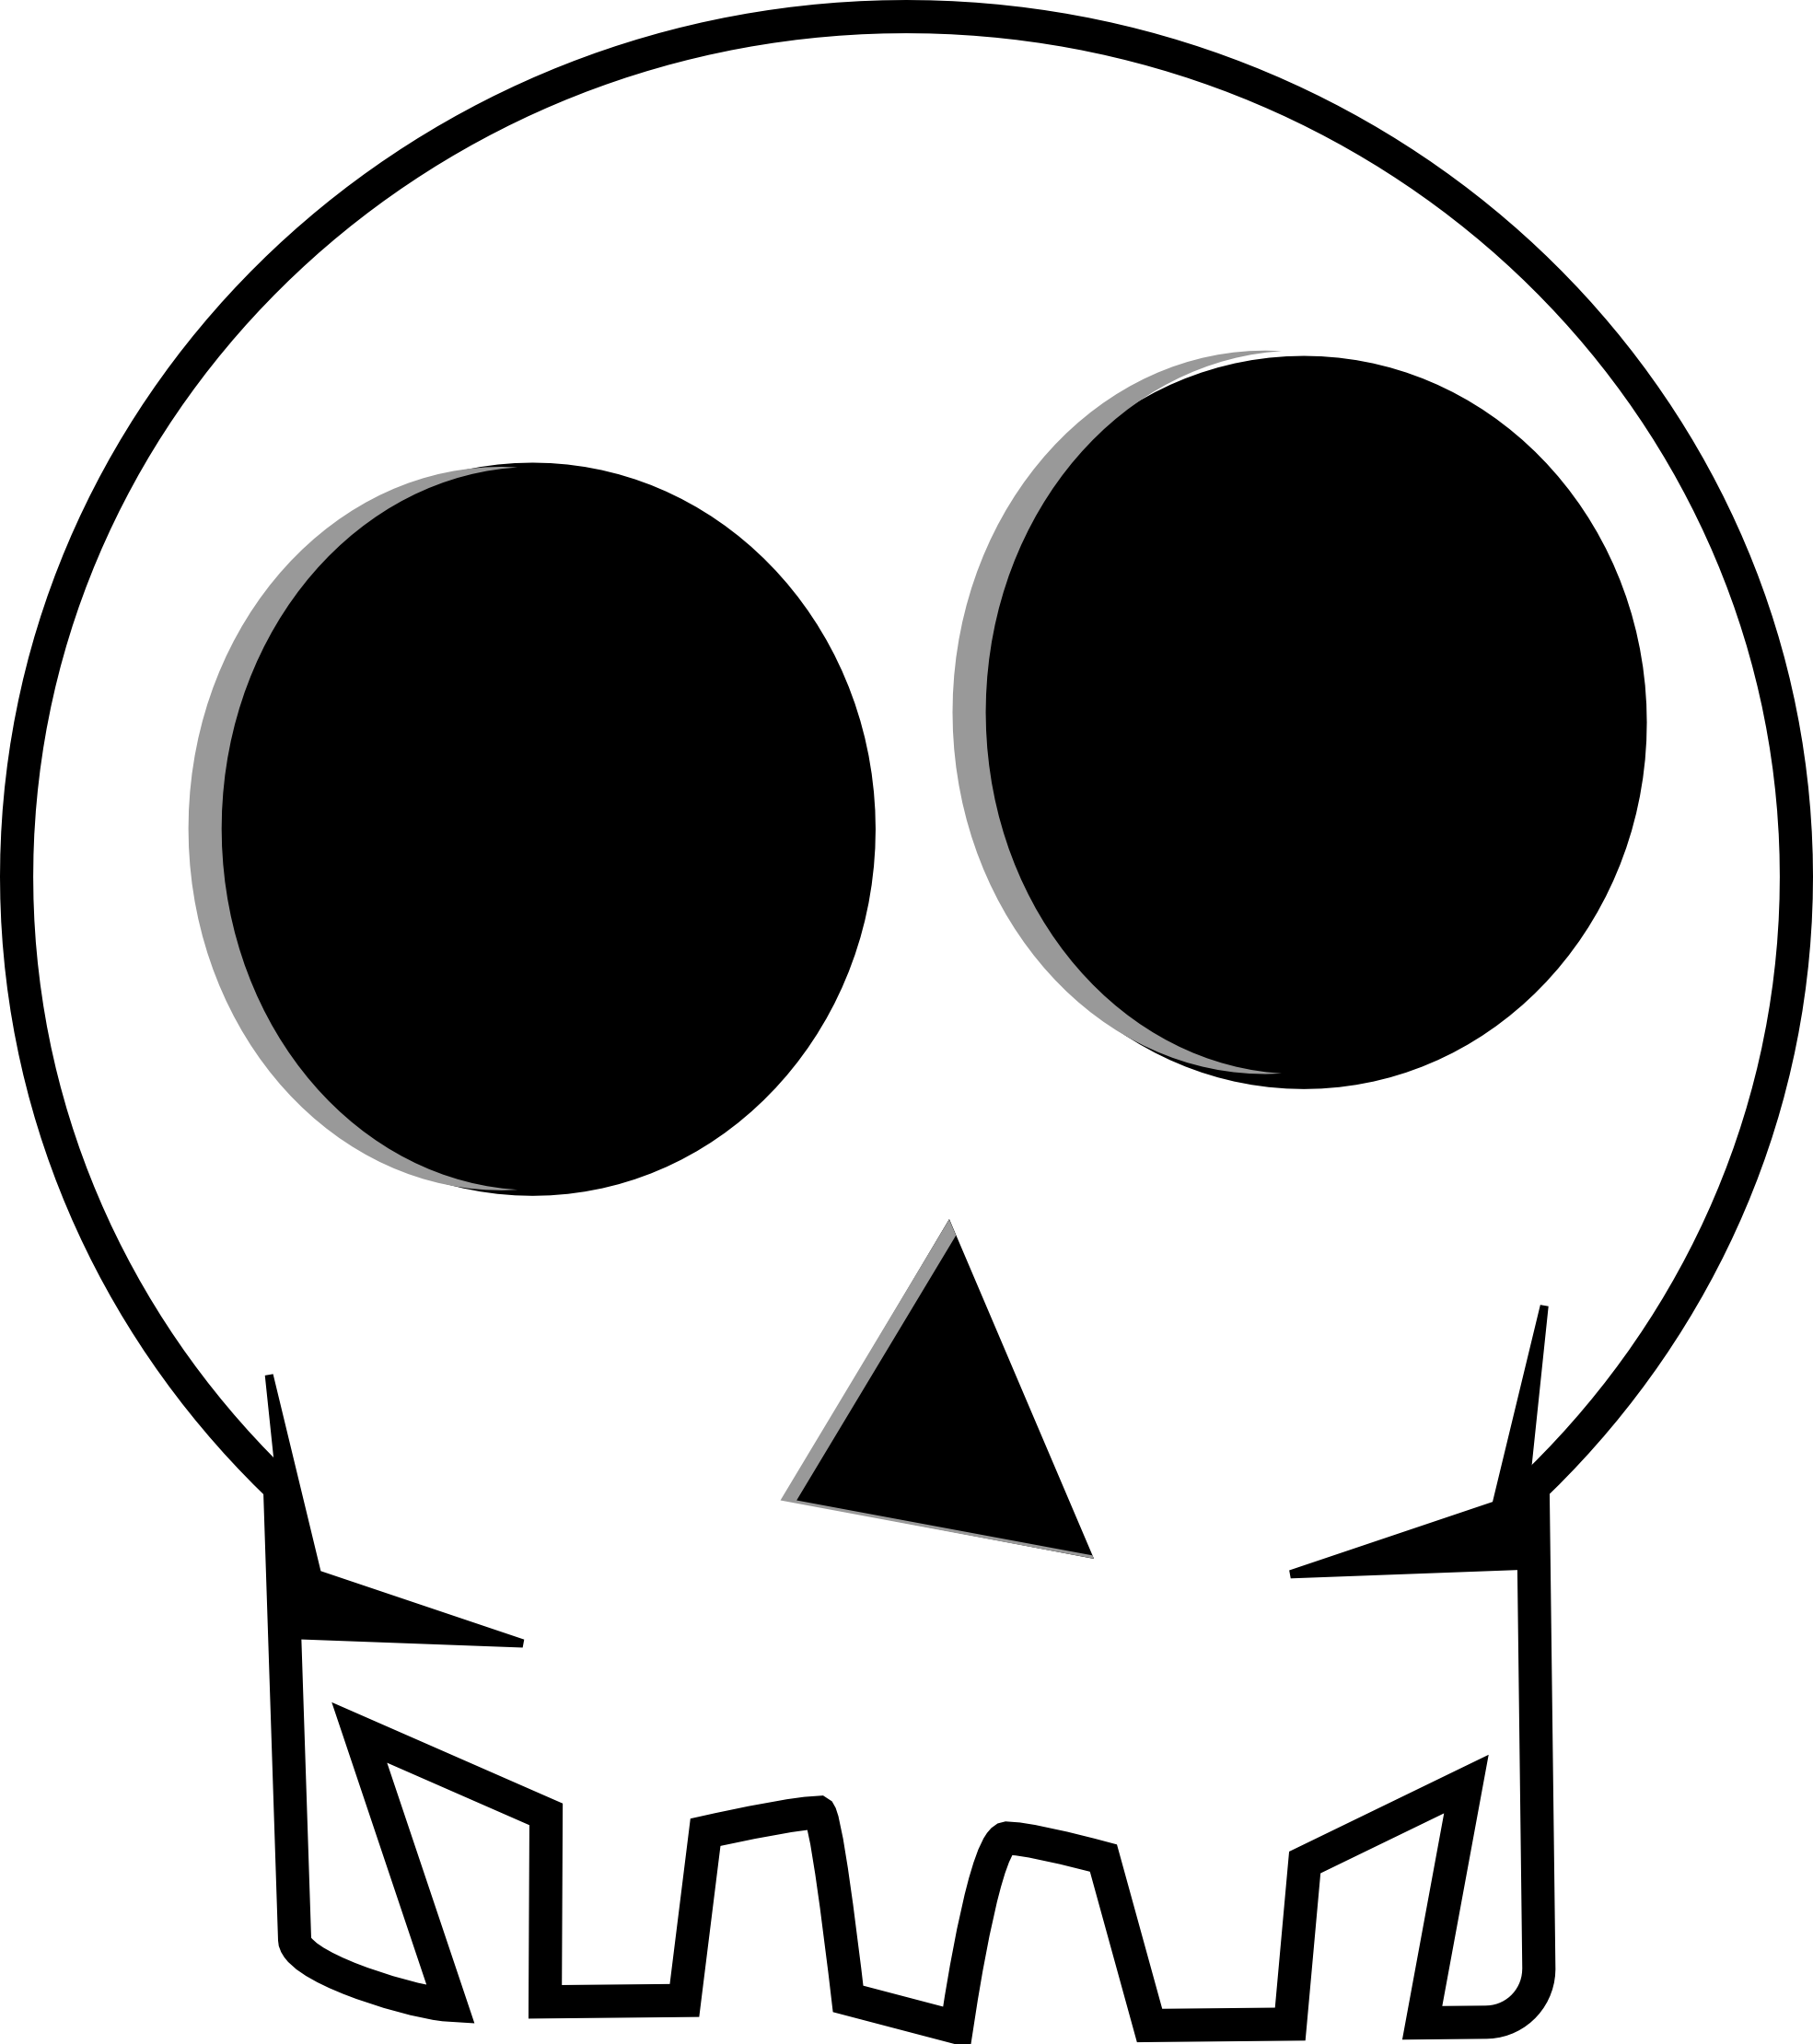 Halloween Skull PNG Free Download